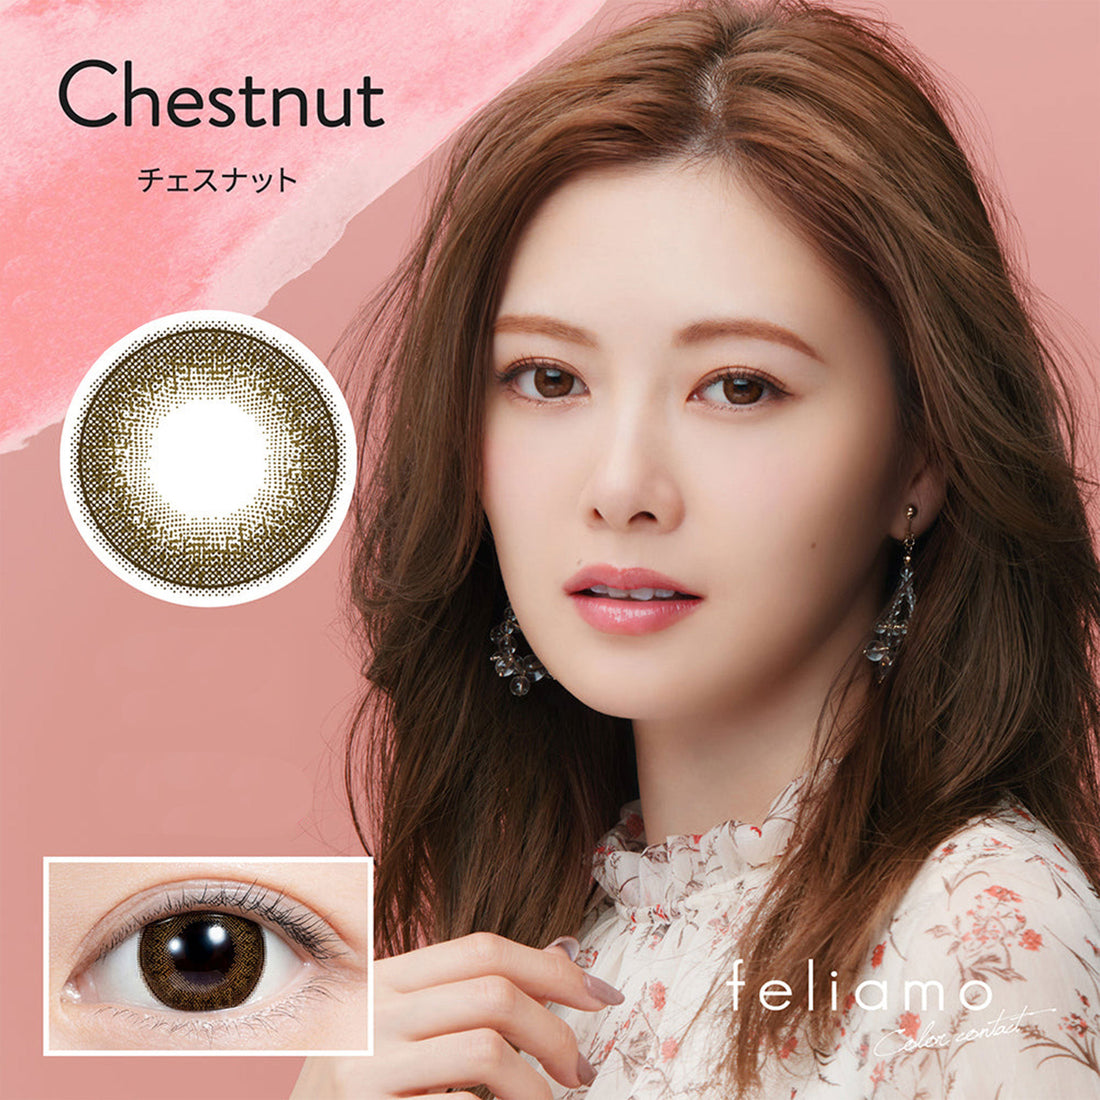 Feliamo 1Day Contact Lenses-Chestnut 10pcs